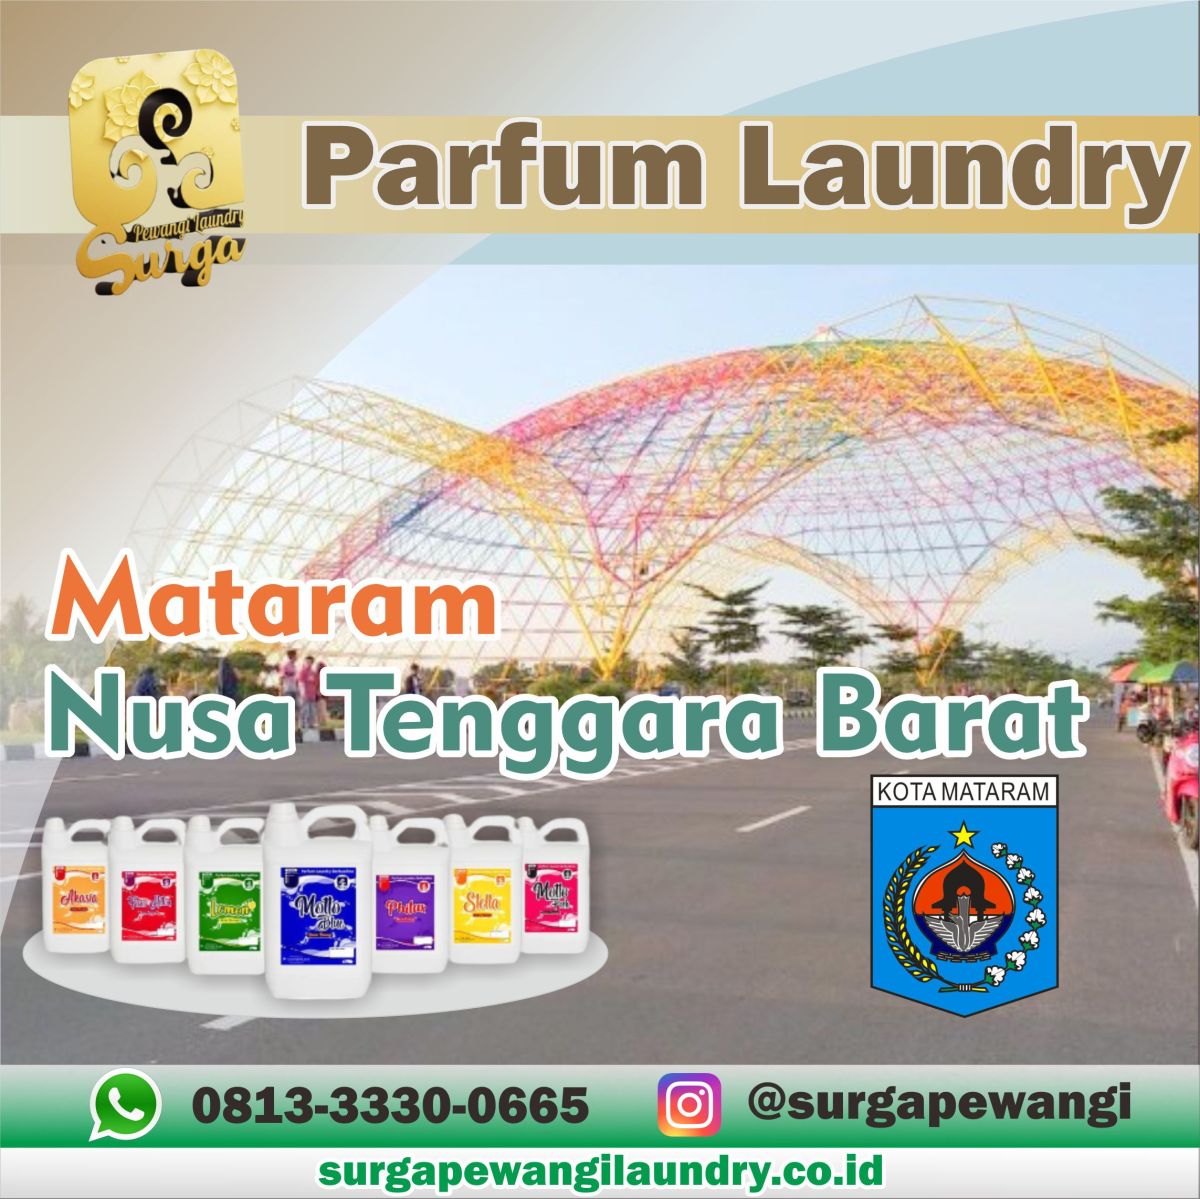 Parfum Laundry Kota Mataram, Nusa Tenggara Barat